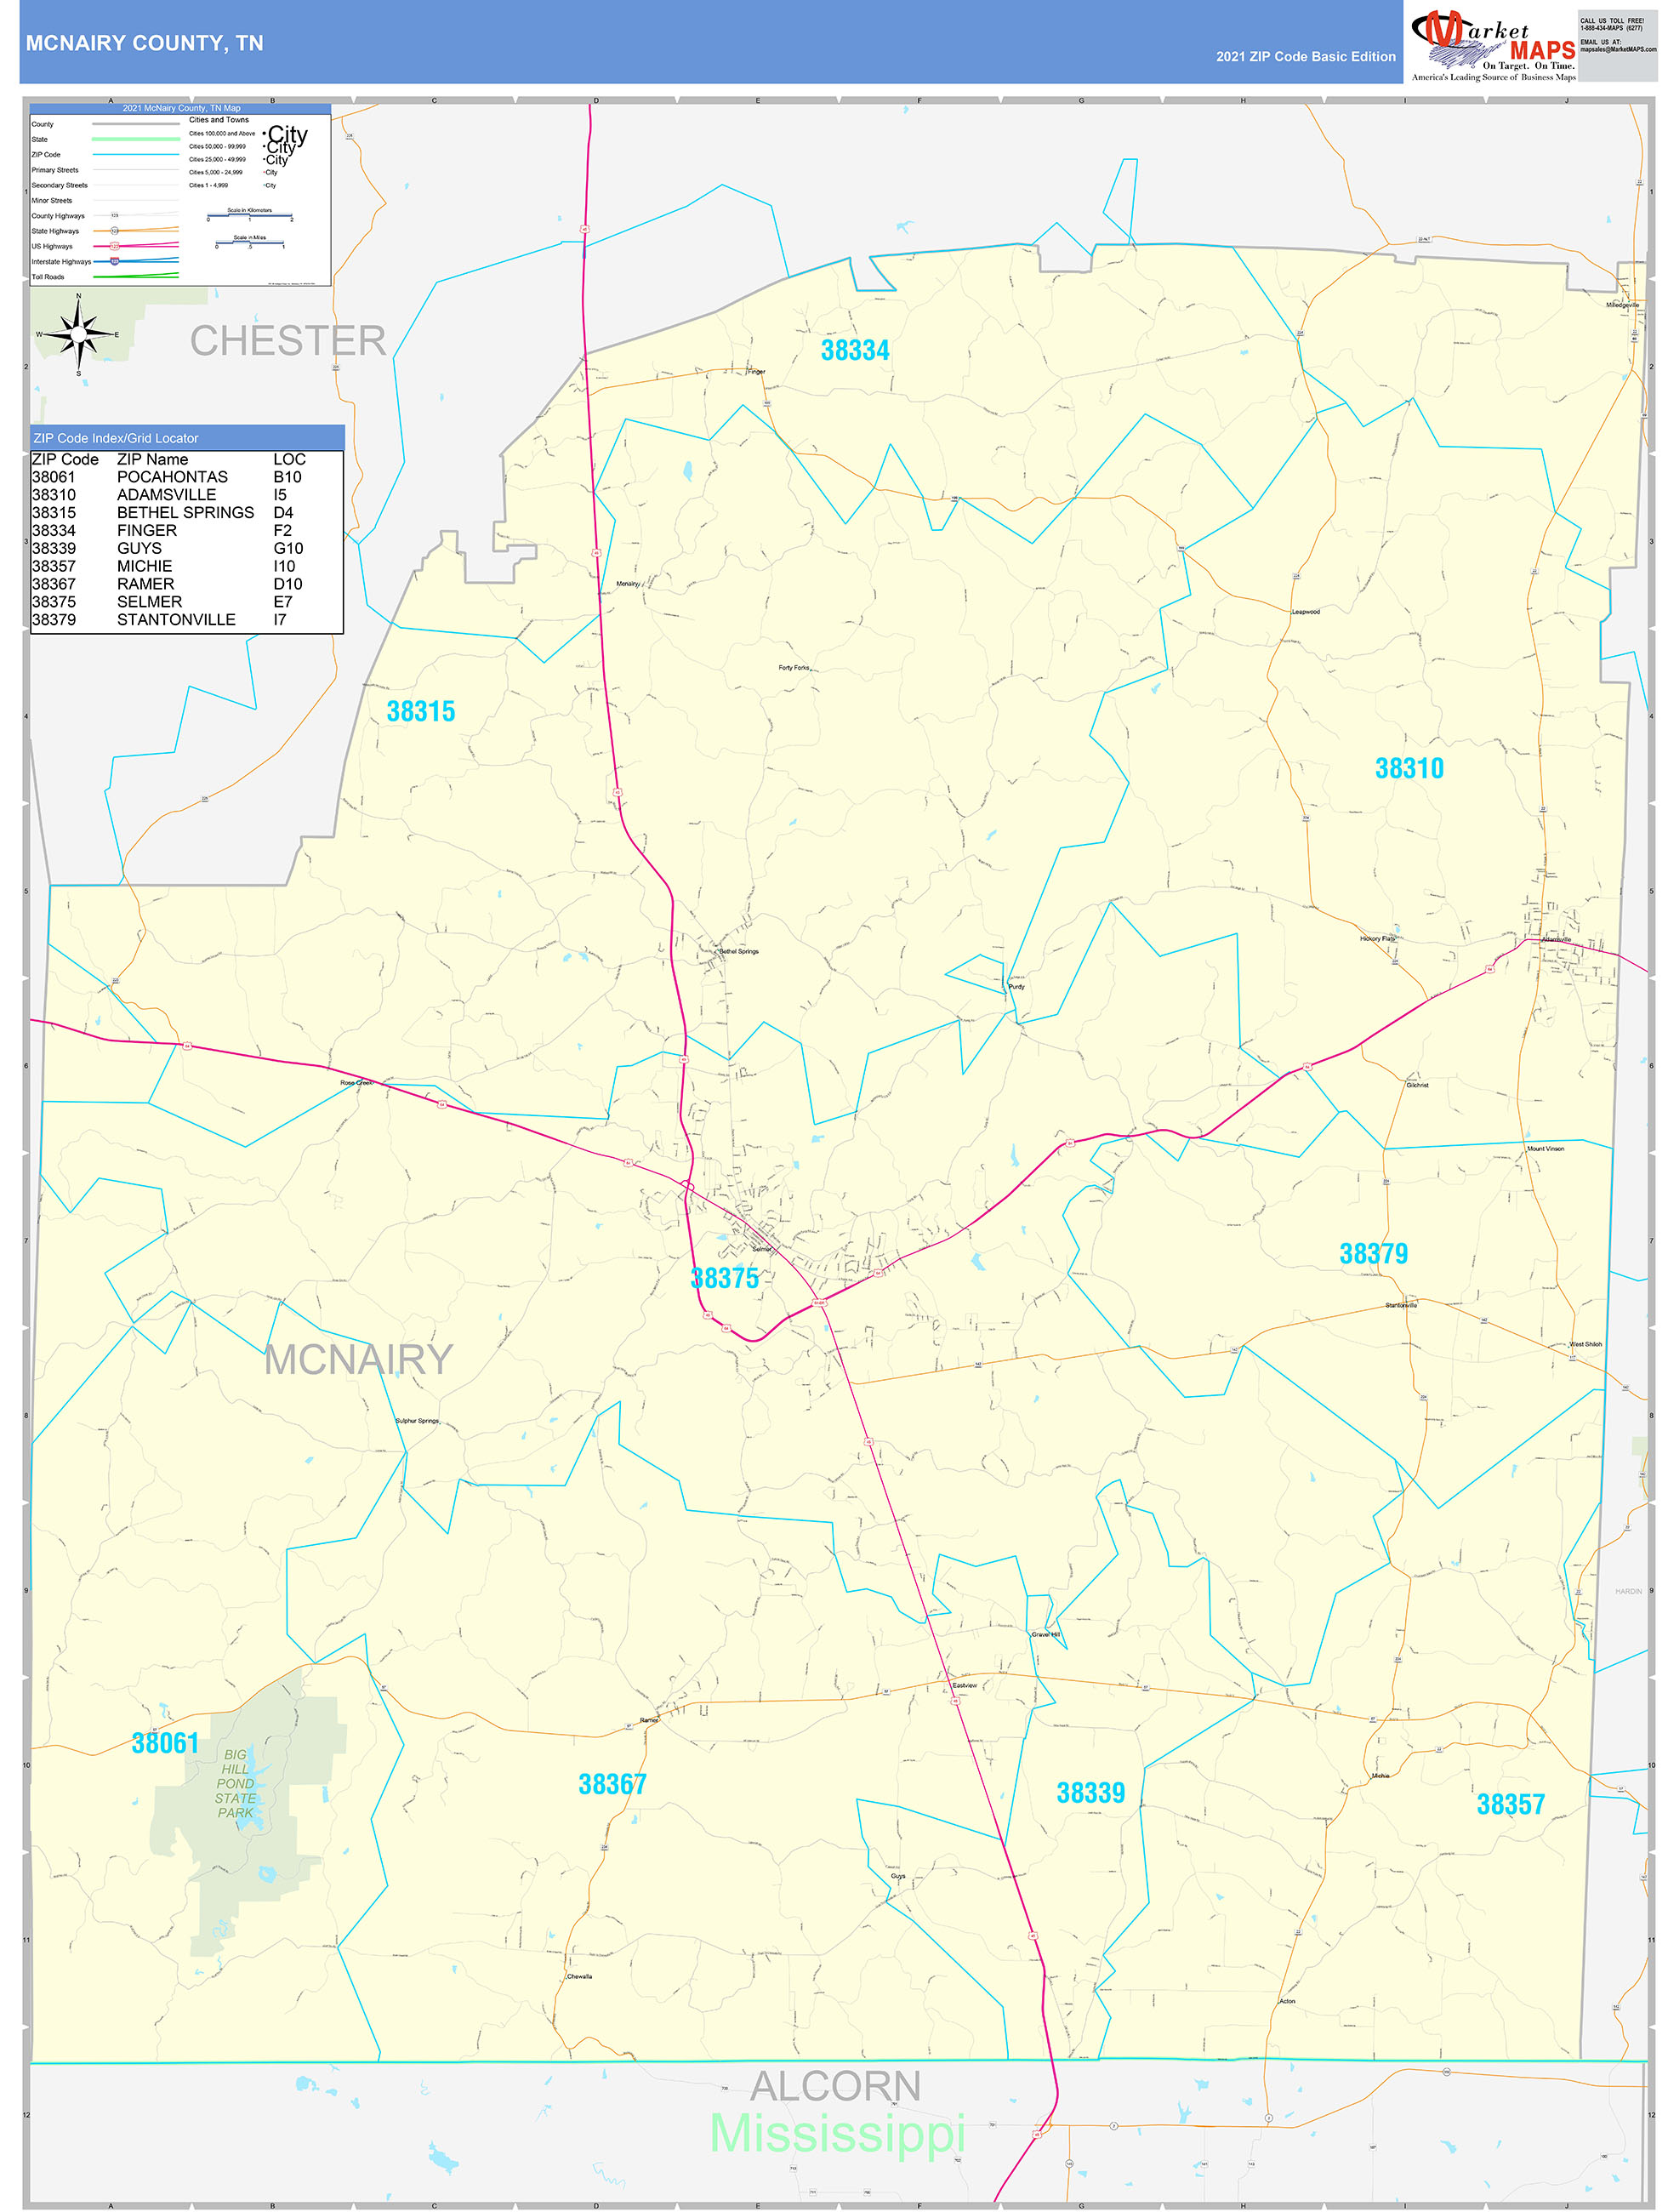 McNairy County, TN Zip Code Wall Map Basic Style by MarketMAPS - MapSales